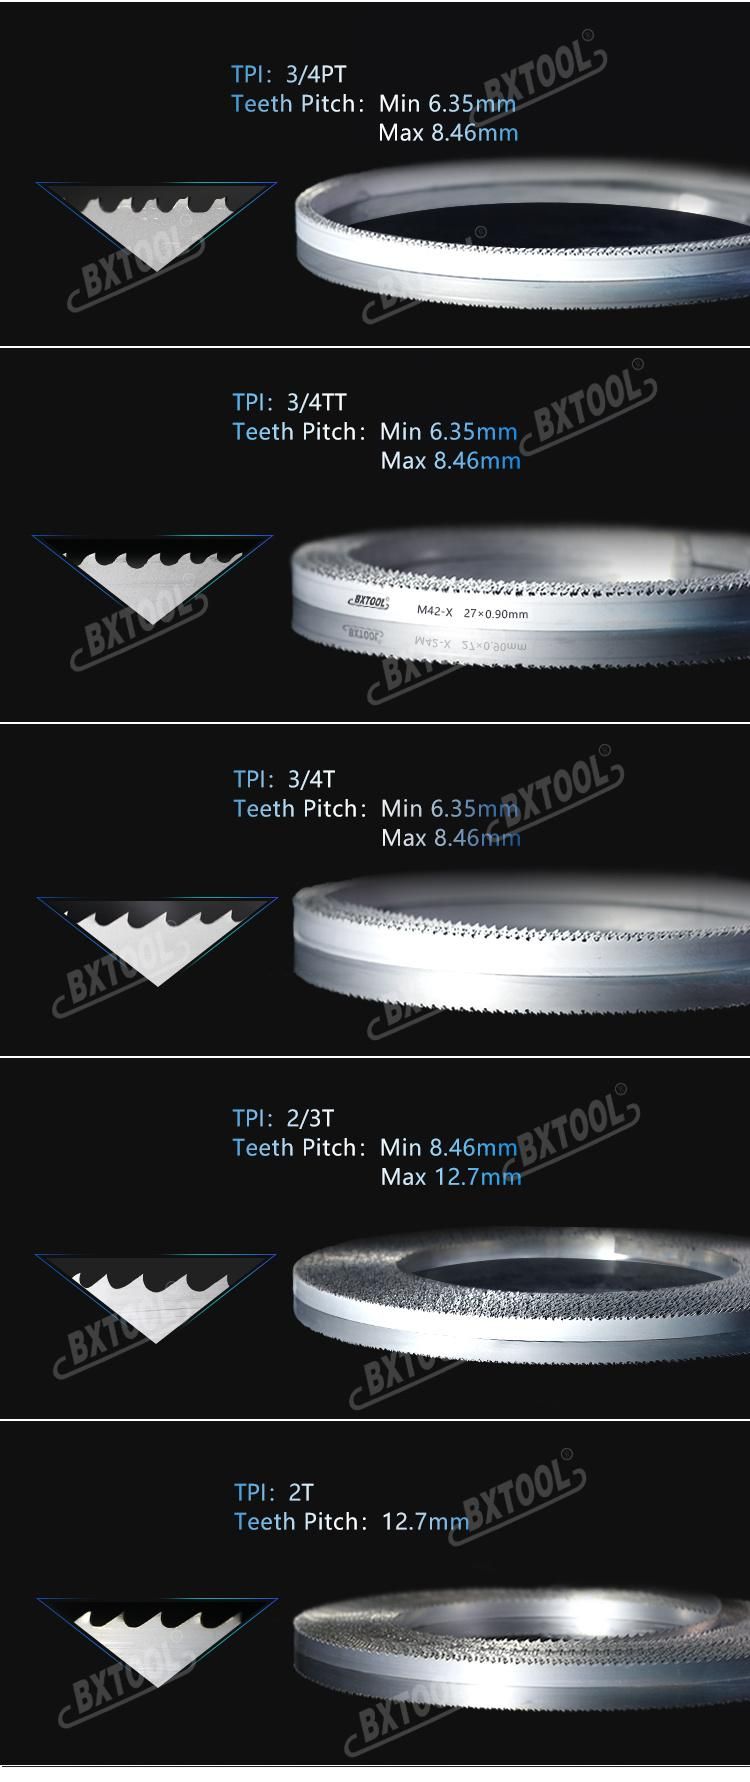 Bxtool 27*0.9mm Bimetal Band Saw Blades German Tech Bimetal Cutting Tools Aluminum Saw for Metal Cutting